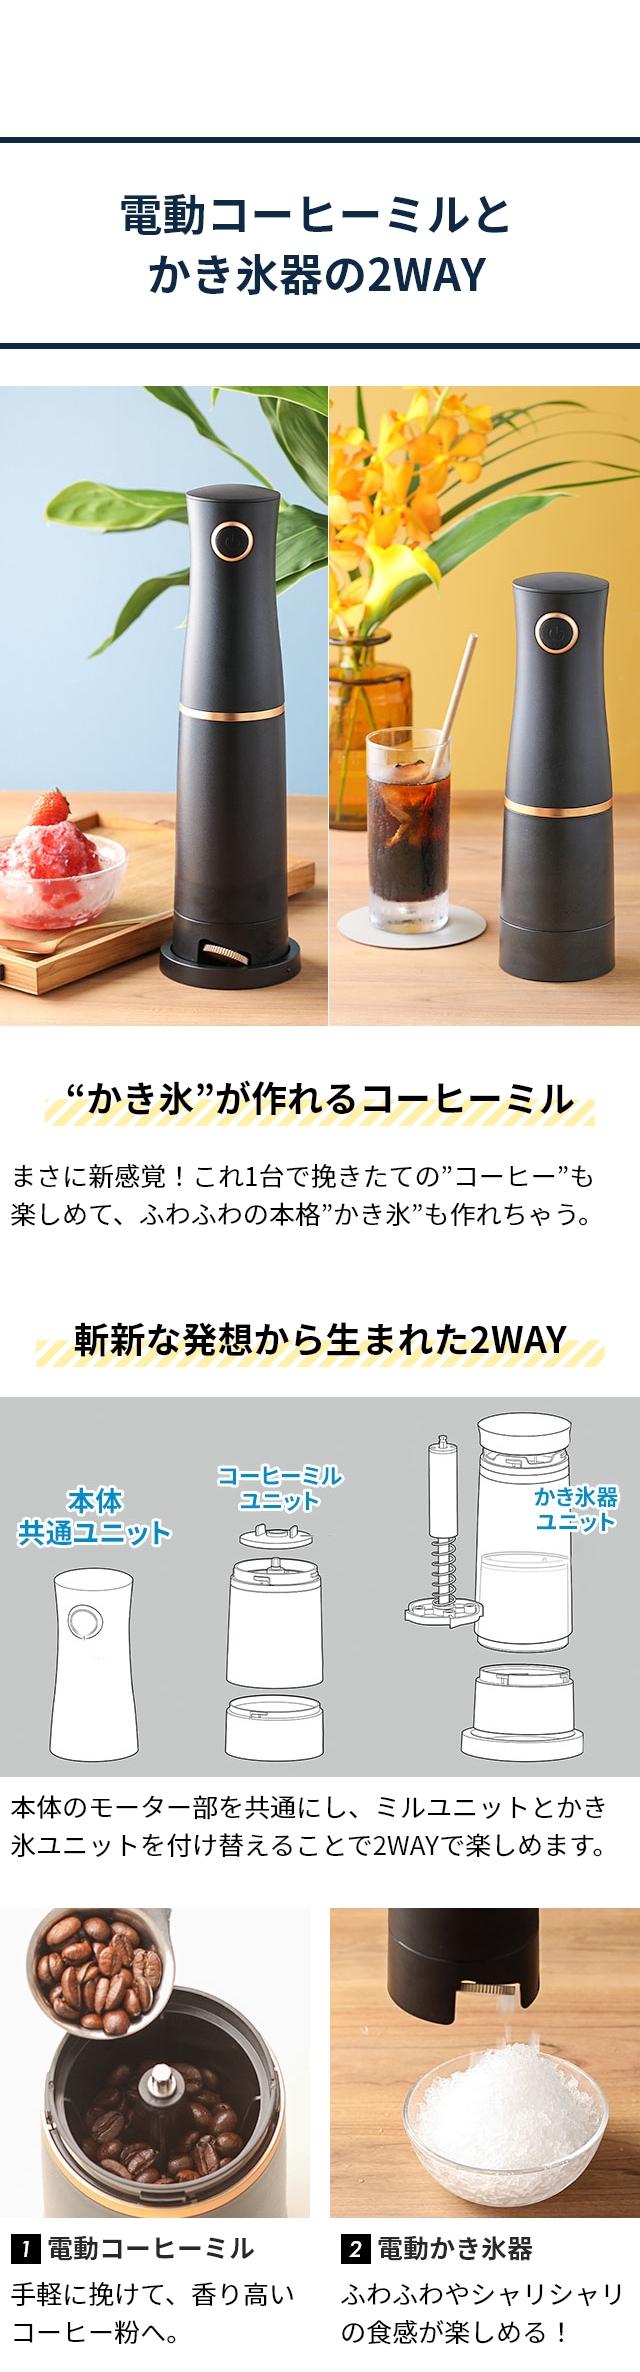 DOSHISHA (ドウシシャ) 電動コーヒーミルかき氷器（IceShaver CoffeeMill） DHCI-B3